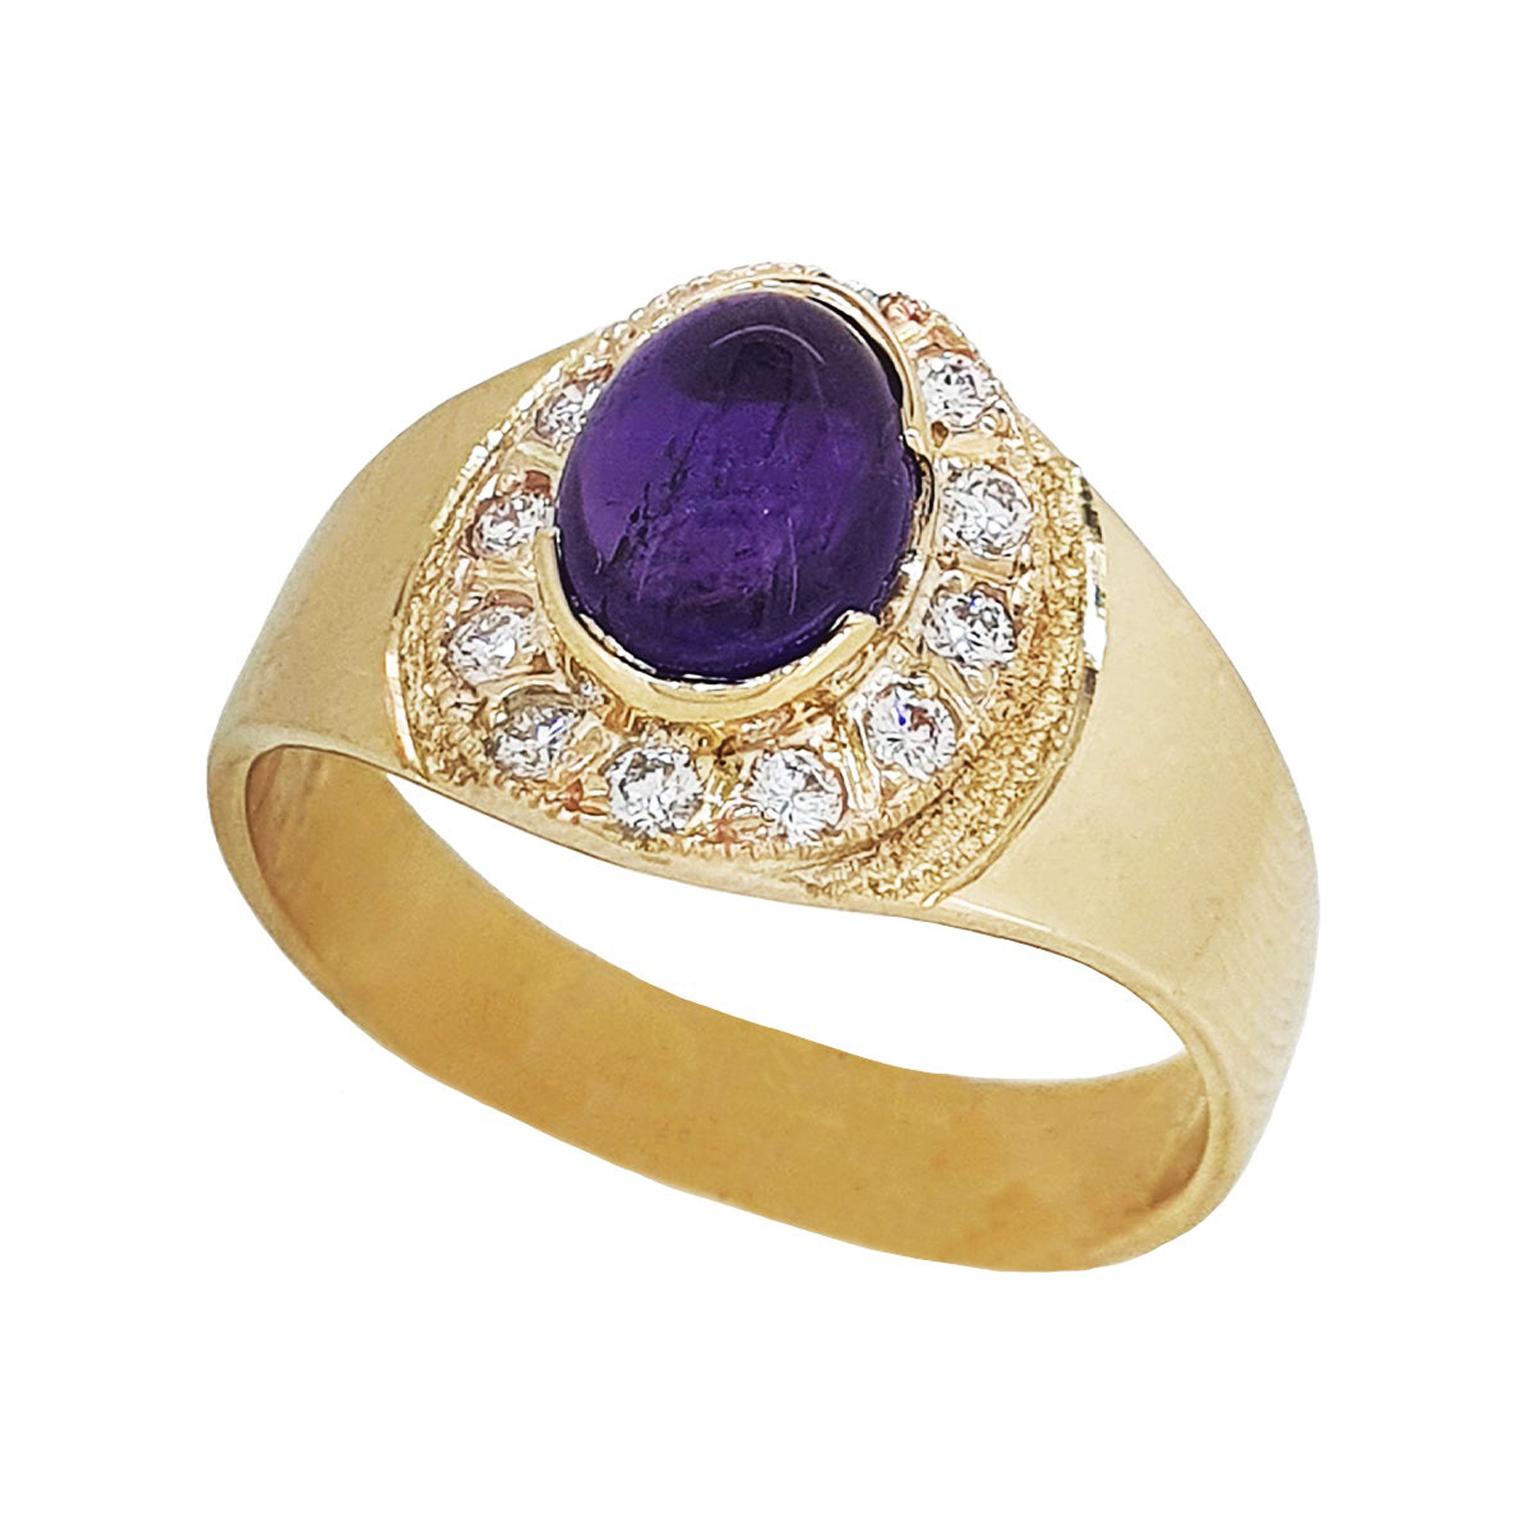 Paul Amey 9k Gold, Diamond and Amethyst Ring